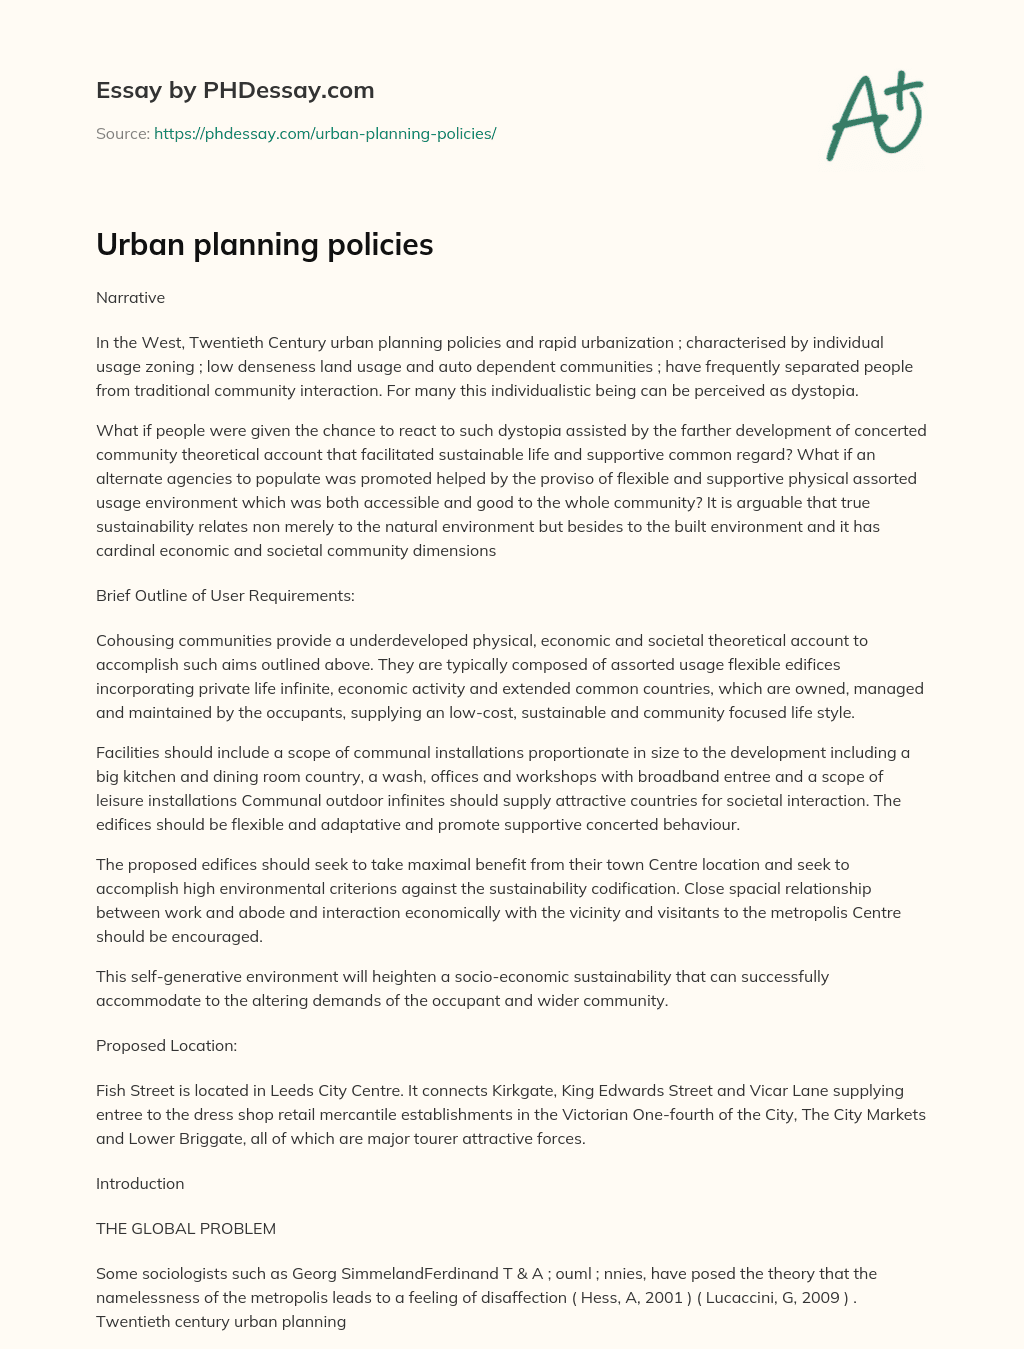 essay about urban planning